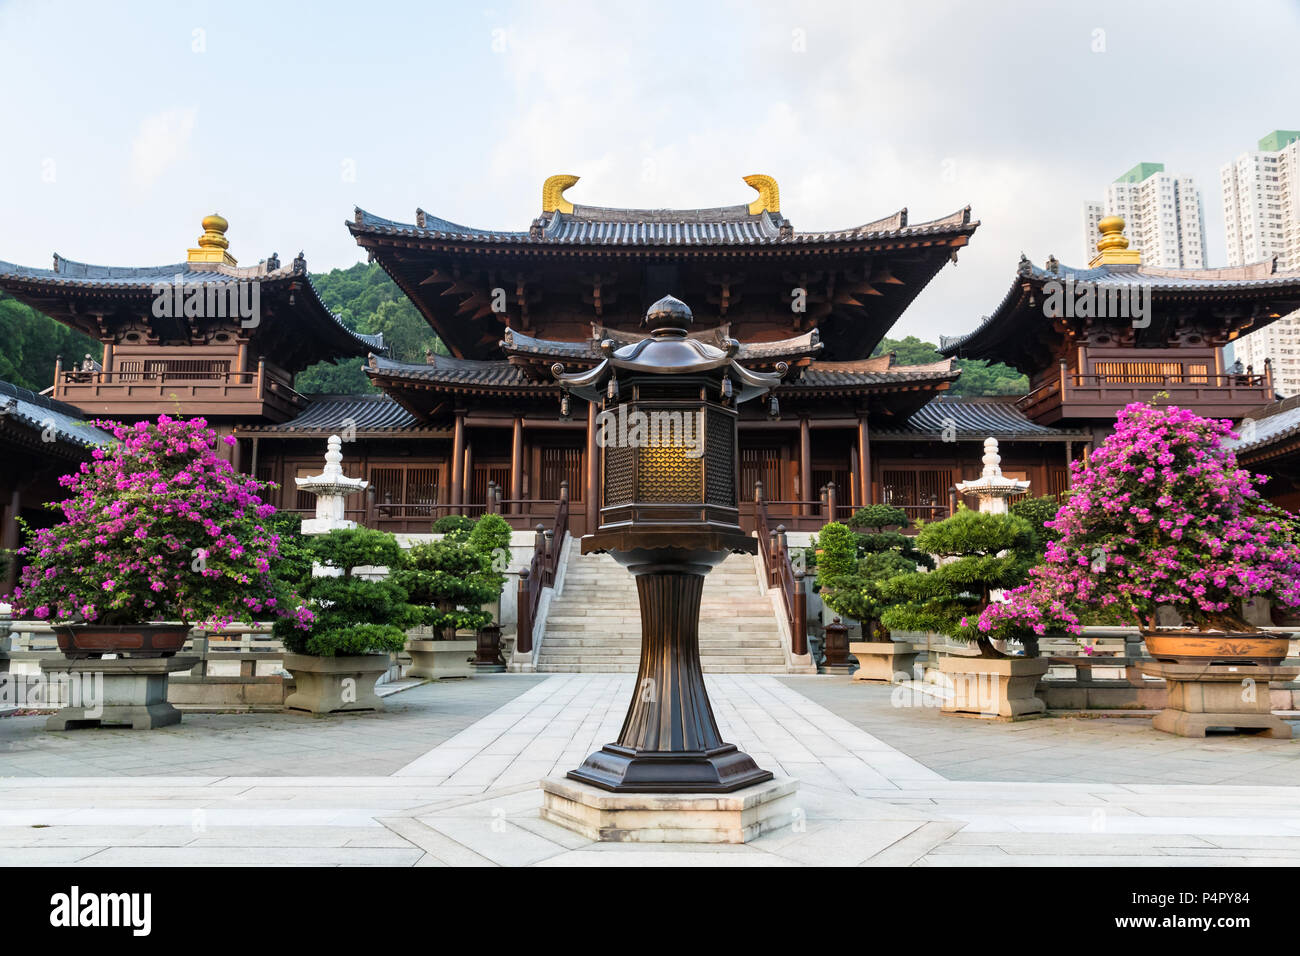 Enclosed courtyard of the Chi Lin Nunnery in Nan Lian garden, Hong Kong. Renovated in Tang Dynasty style. Stock Photo